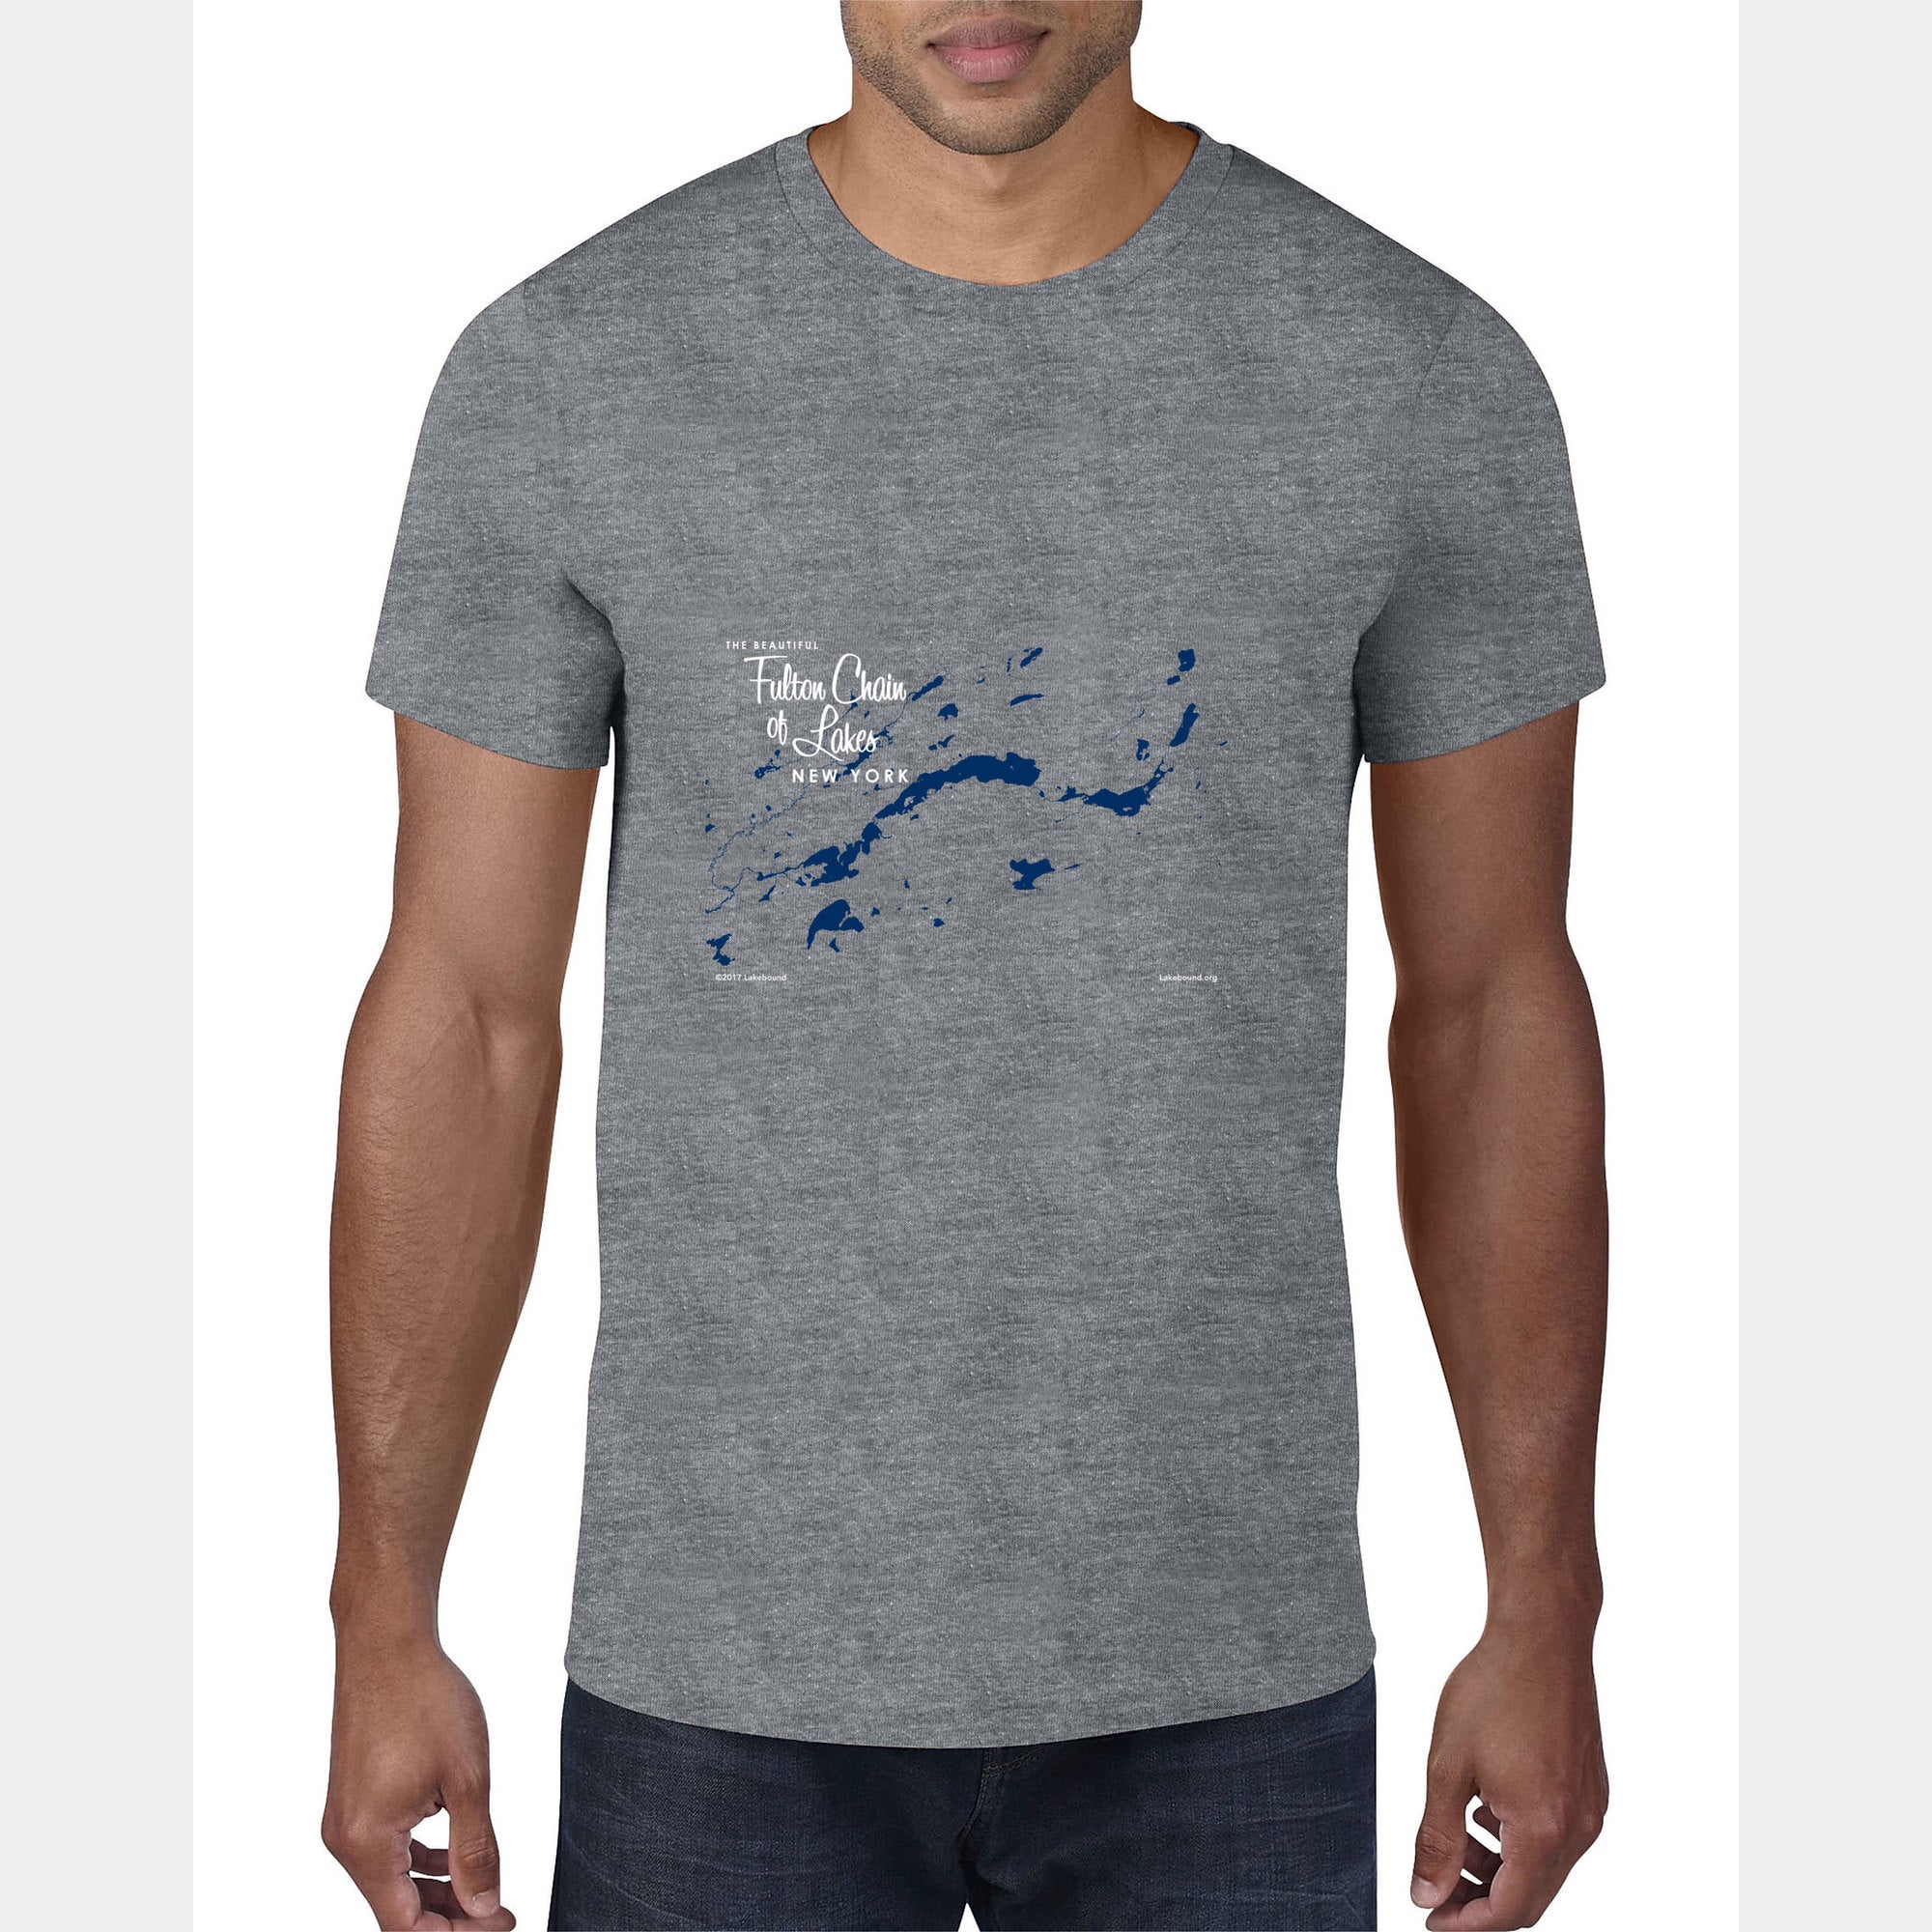 Fulton Chain of Lakes New York, T-Shirt